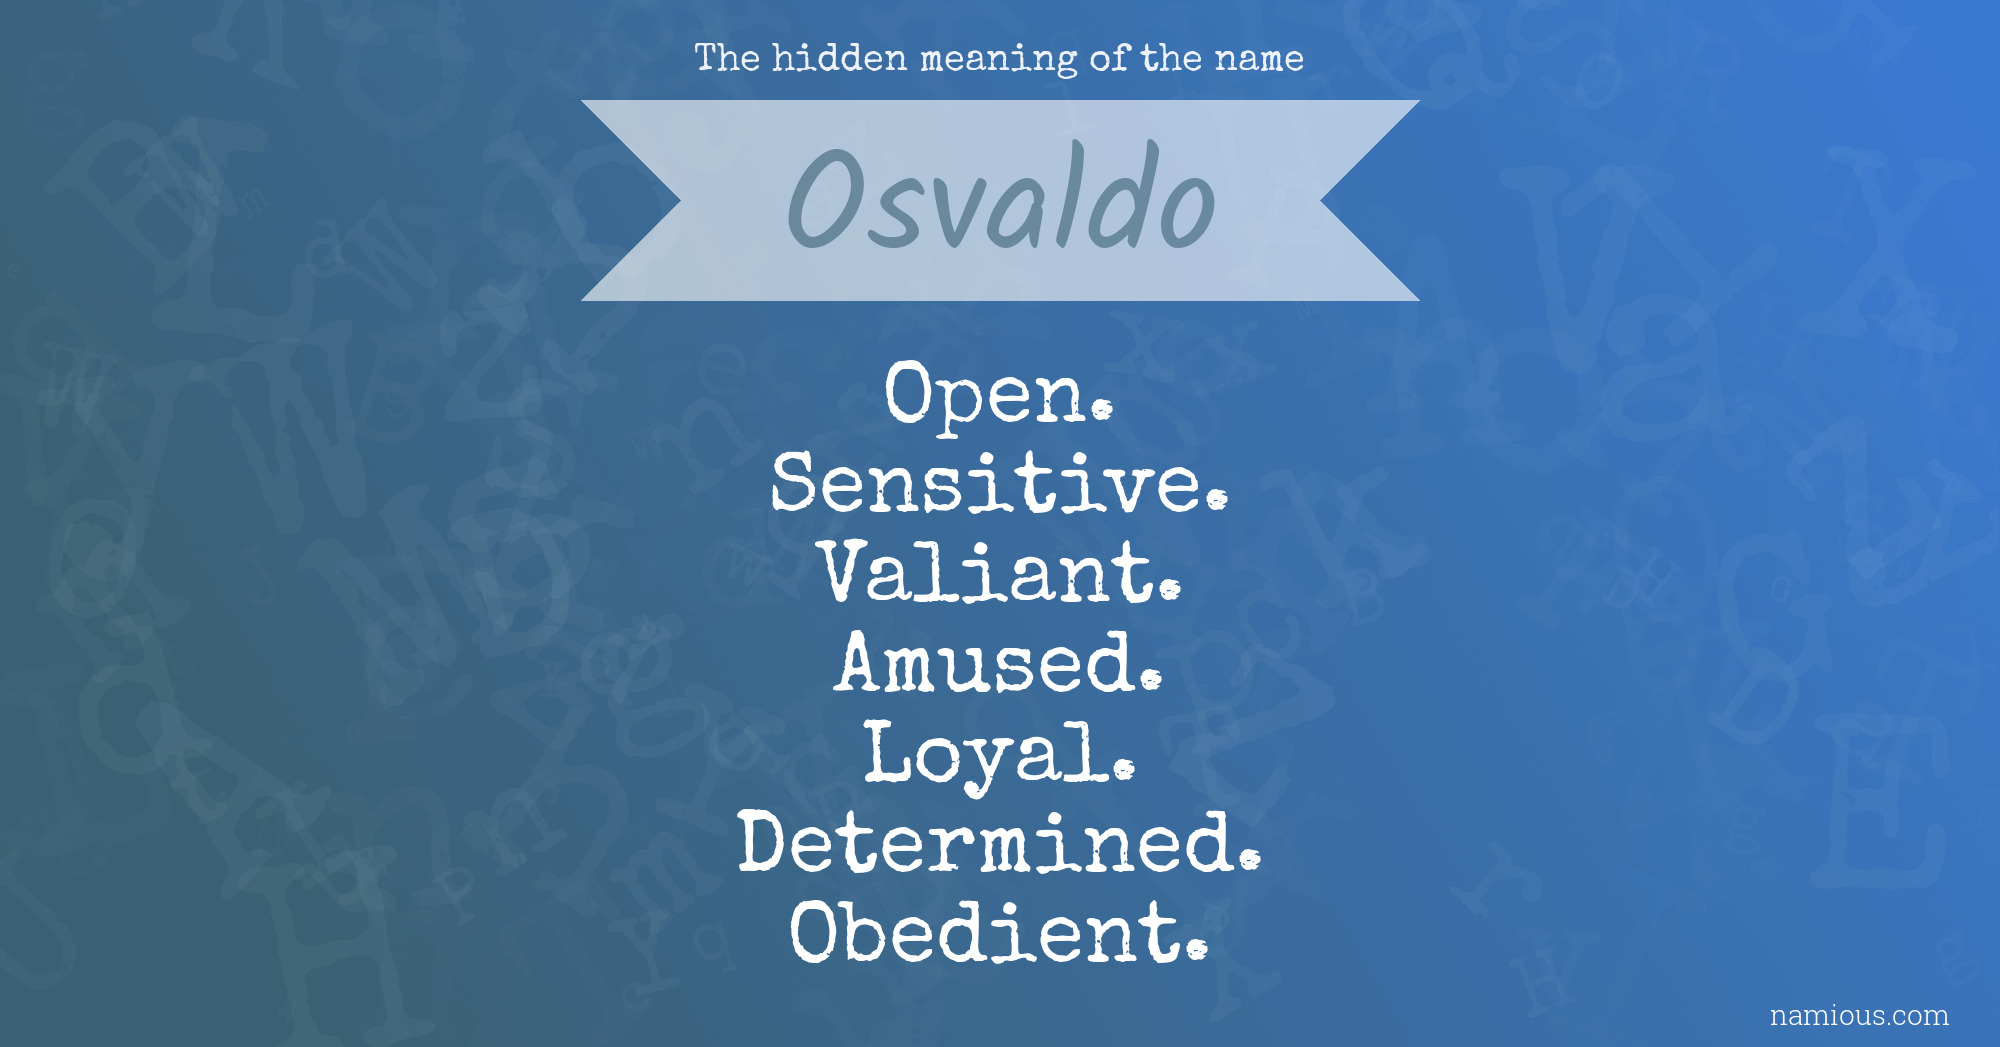 The hidden meaning of the name Osvaldo